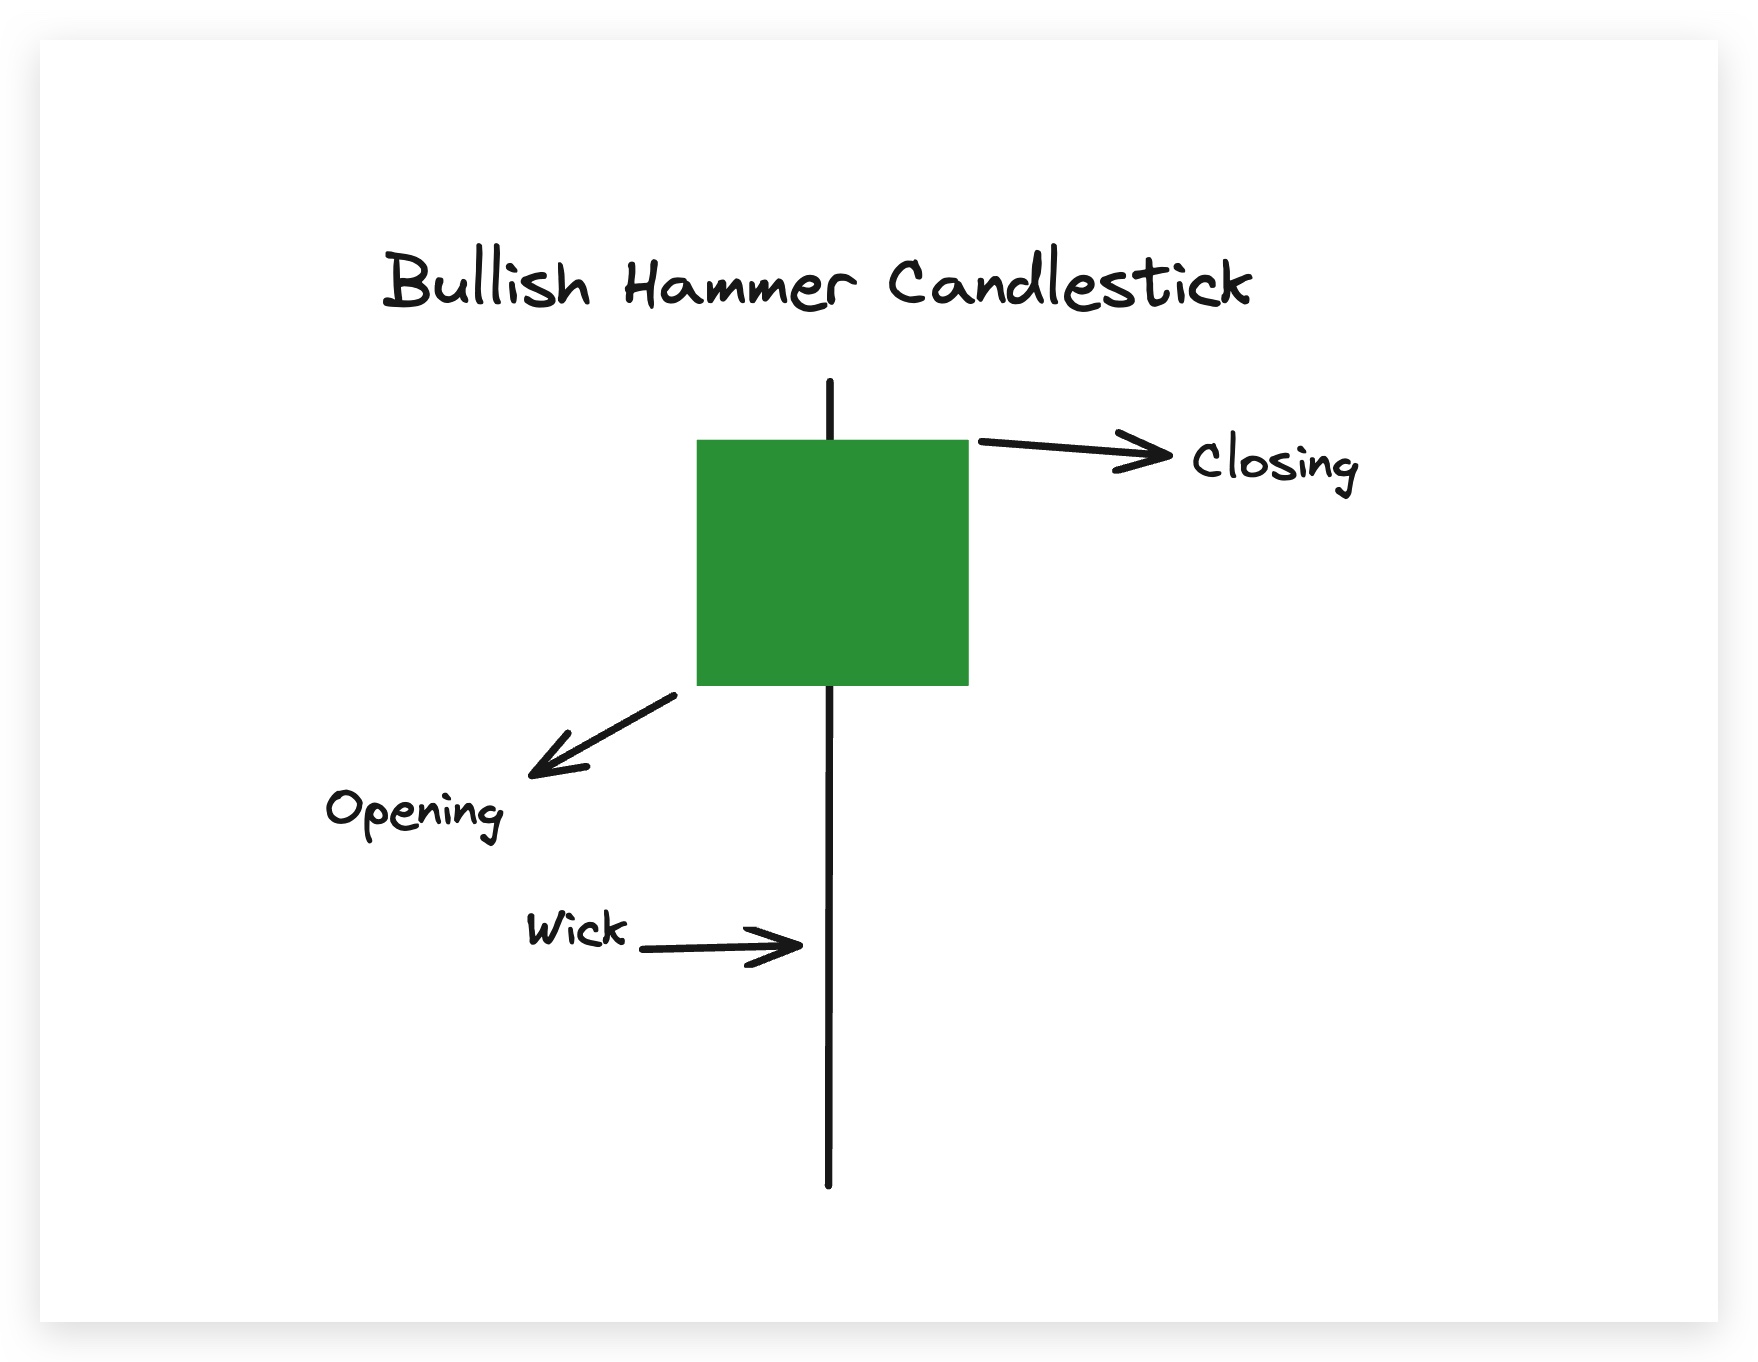 Bullish Hammer Candlestick:
Closing, Opening, and Wick.